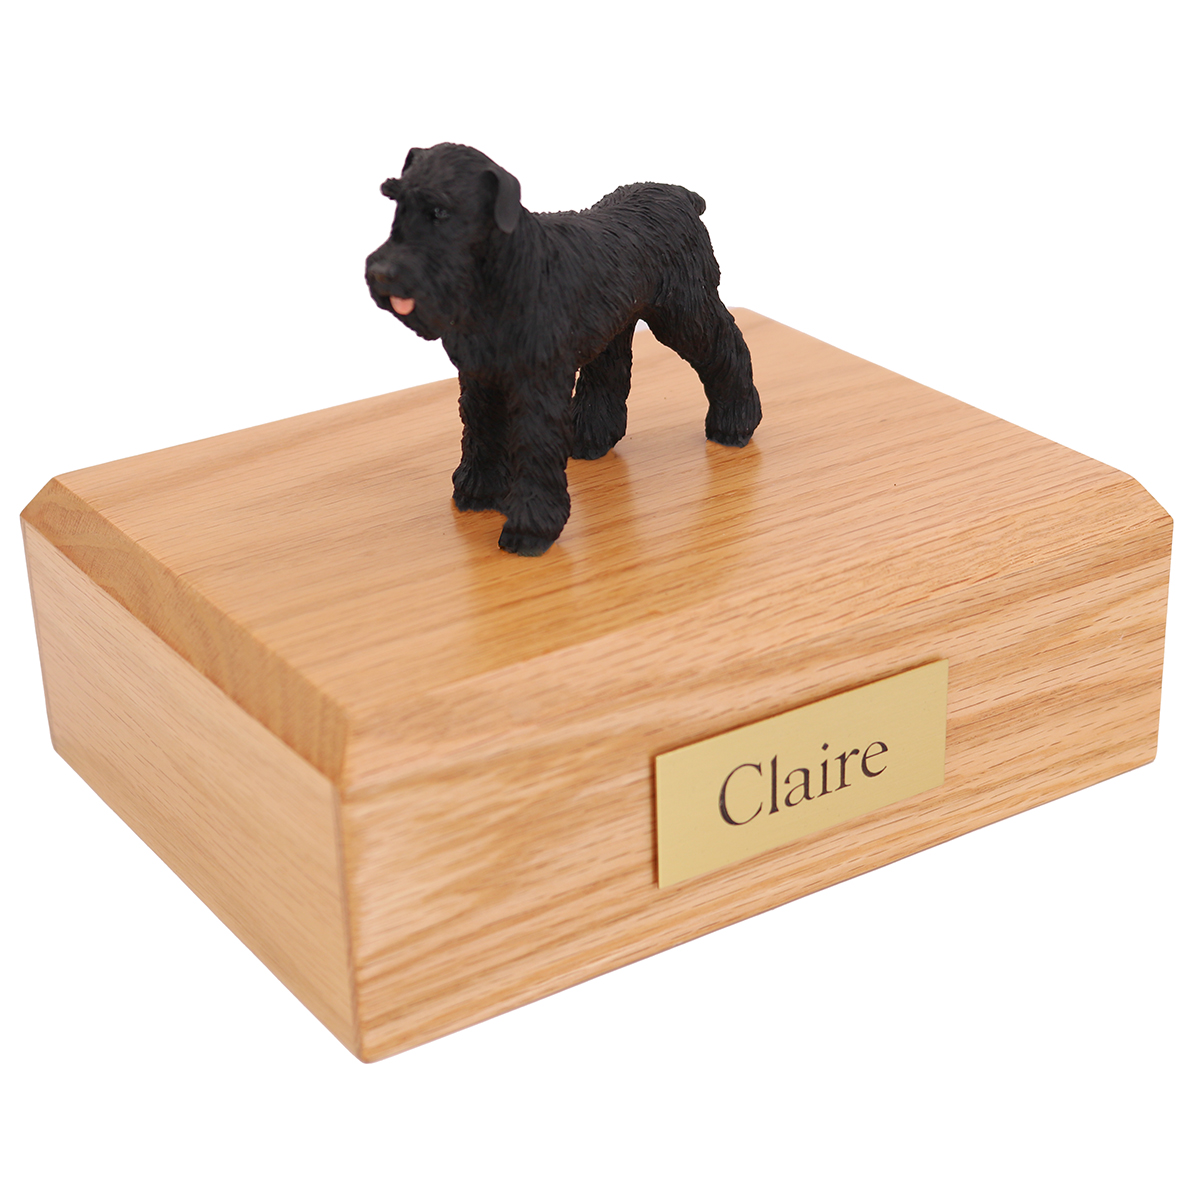 Dog, Schnauzer, Black - ears down - Figurine Urn